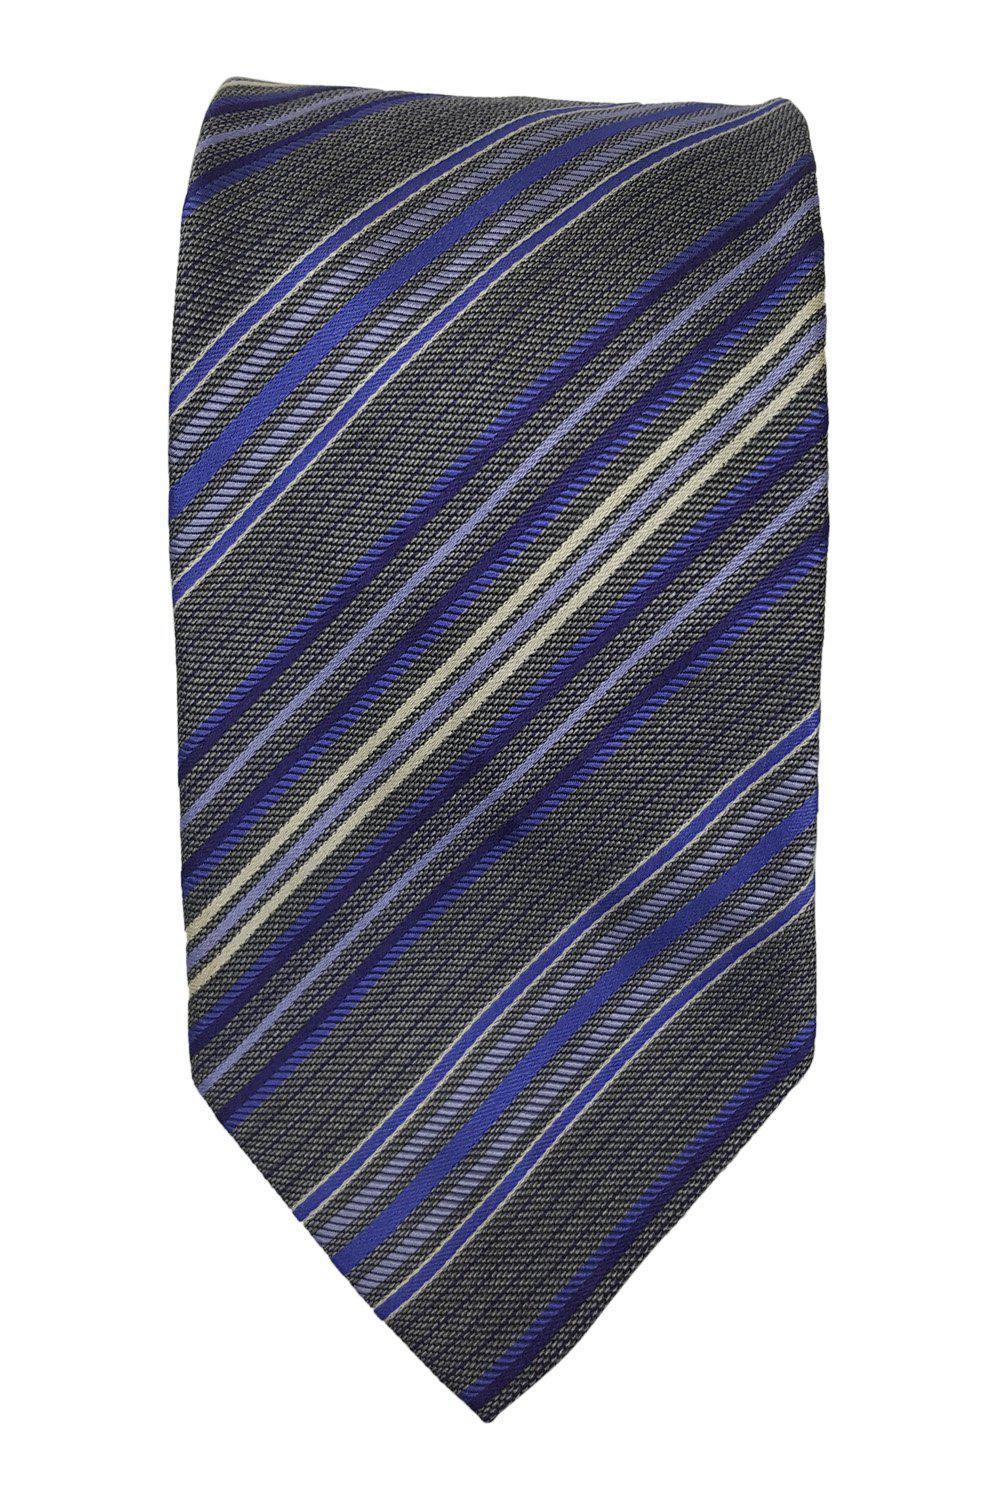 JAEGER 100% Silk Grey Tie Contrasting Blue Diagonal Stripes (60")-Jaeger-The Freperie